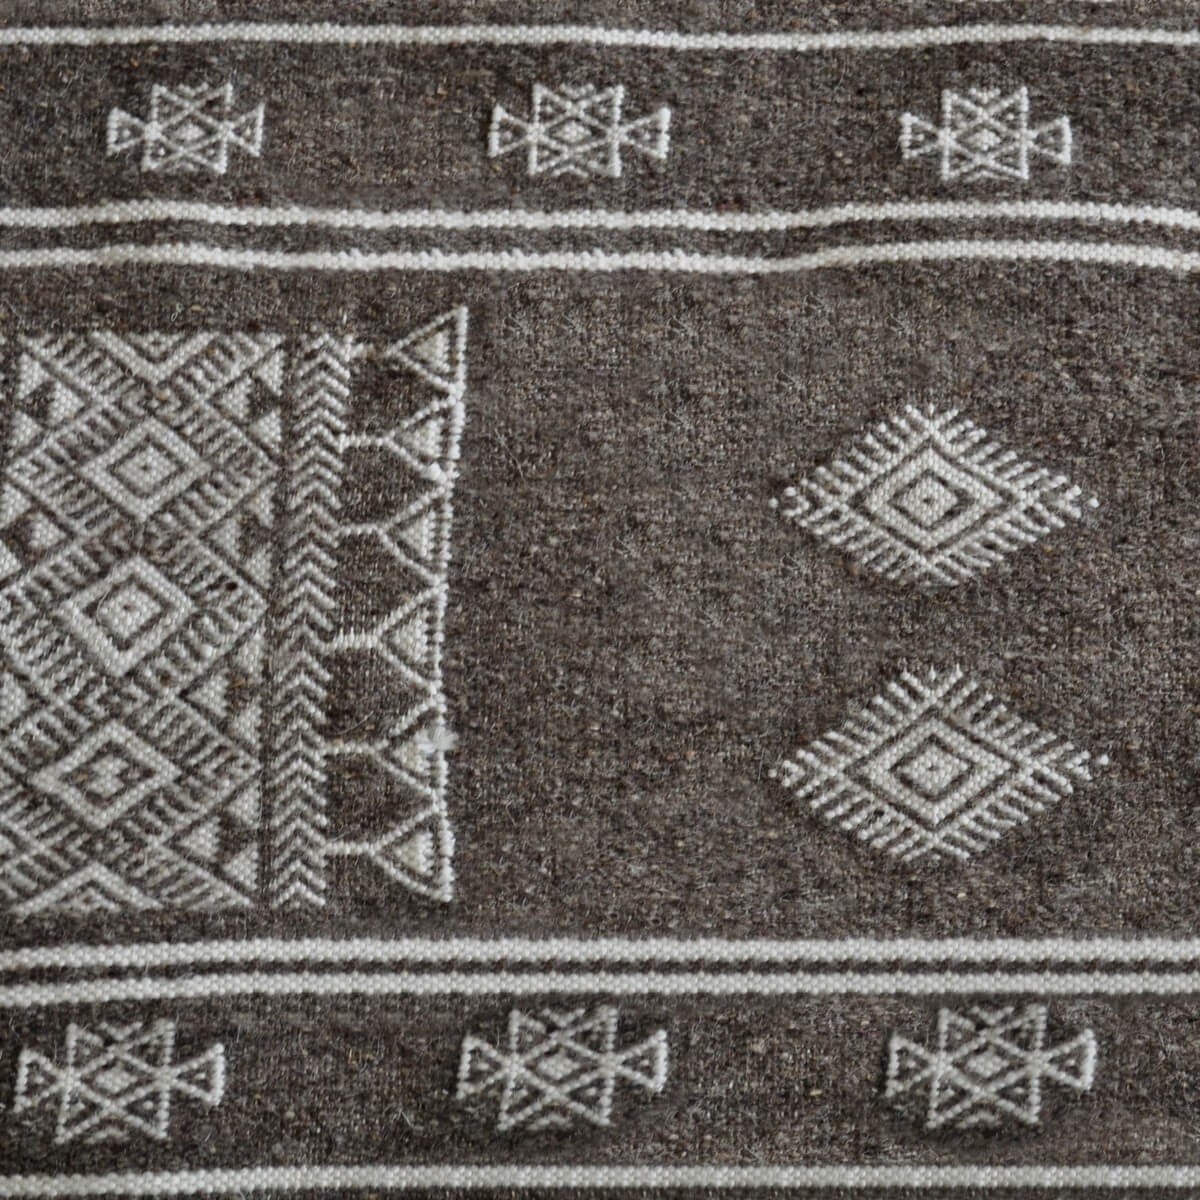 Tapis berbère Tapis Kilim Mizza 65x115 Gris/Blanc (Tissé main, Laine, Tunisie) Tapis kilim tunisien style tapis marocain. Tapis 